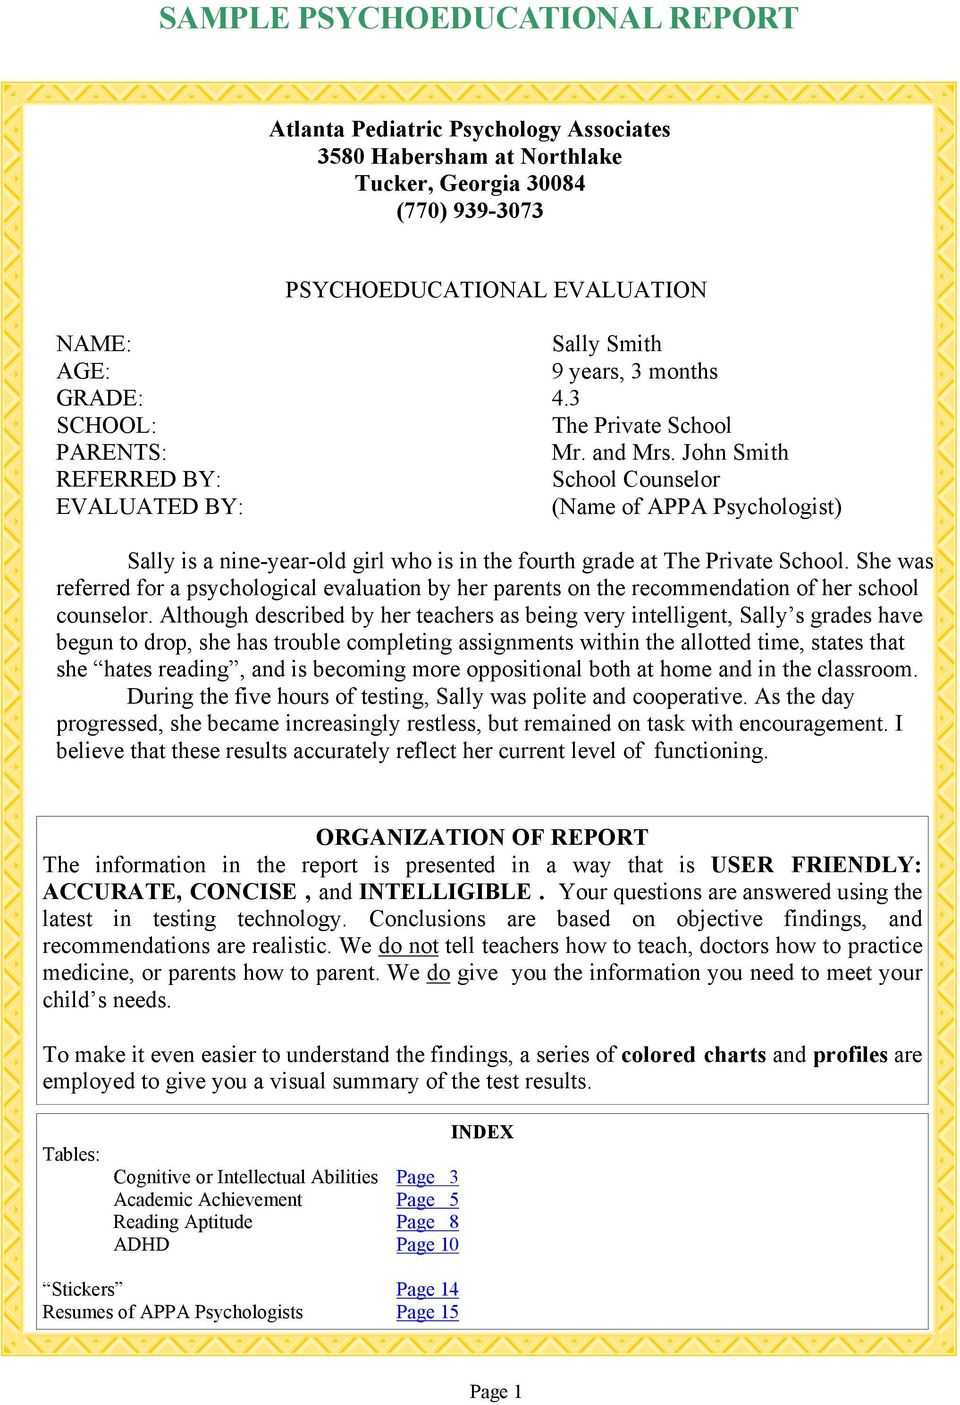 Sample School Psychological Evaluation Report Inside Psychoeducational Report Template